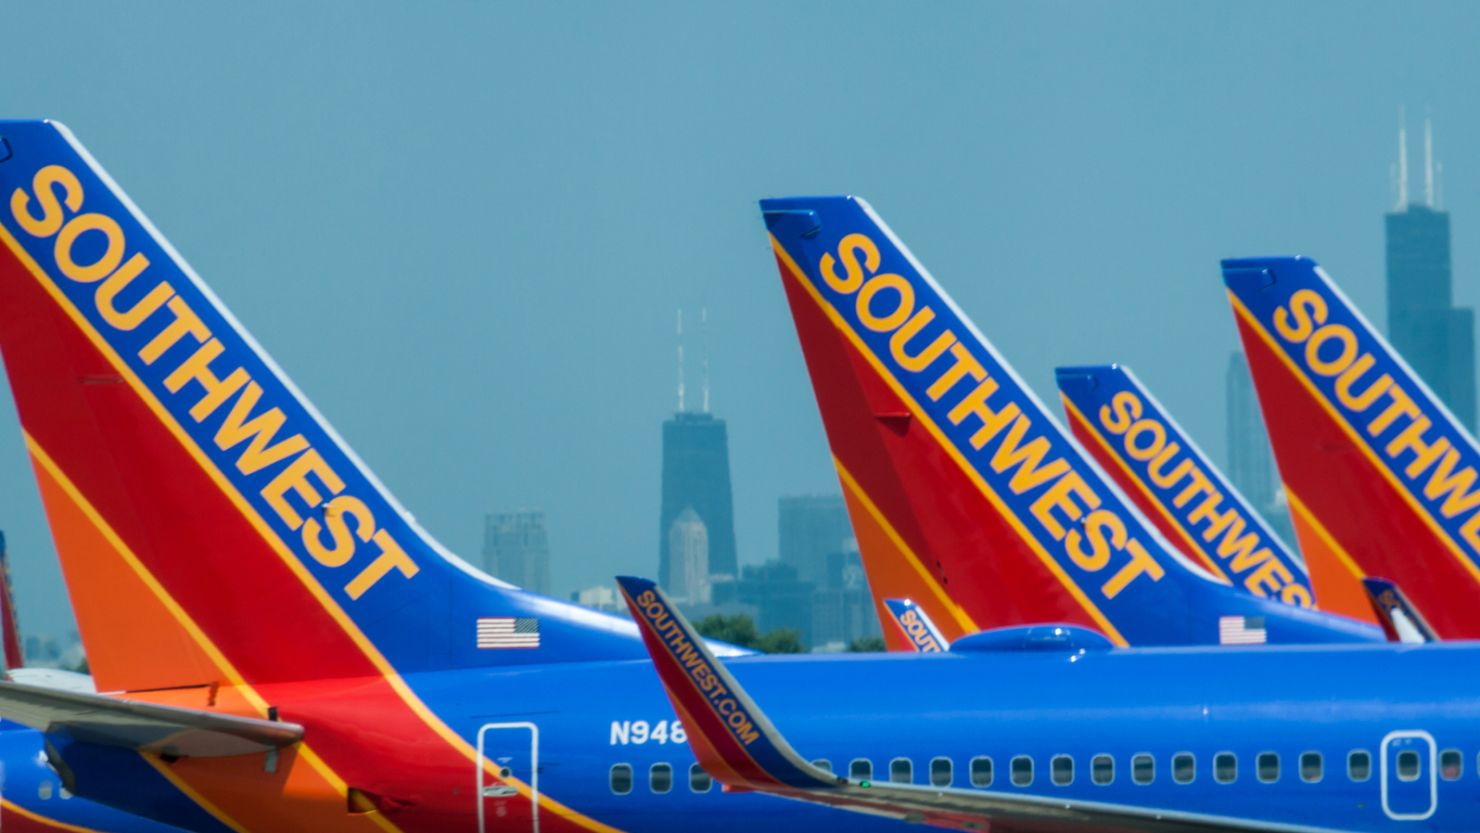 underscored southwest airlines plane tails